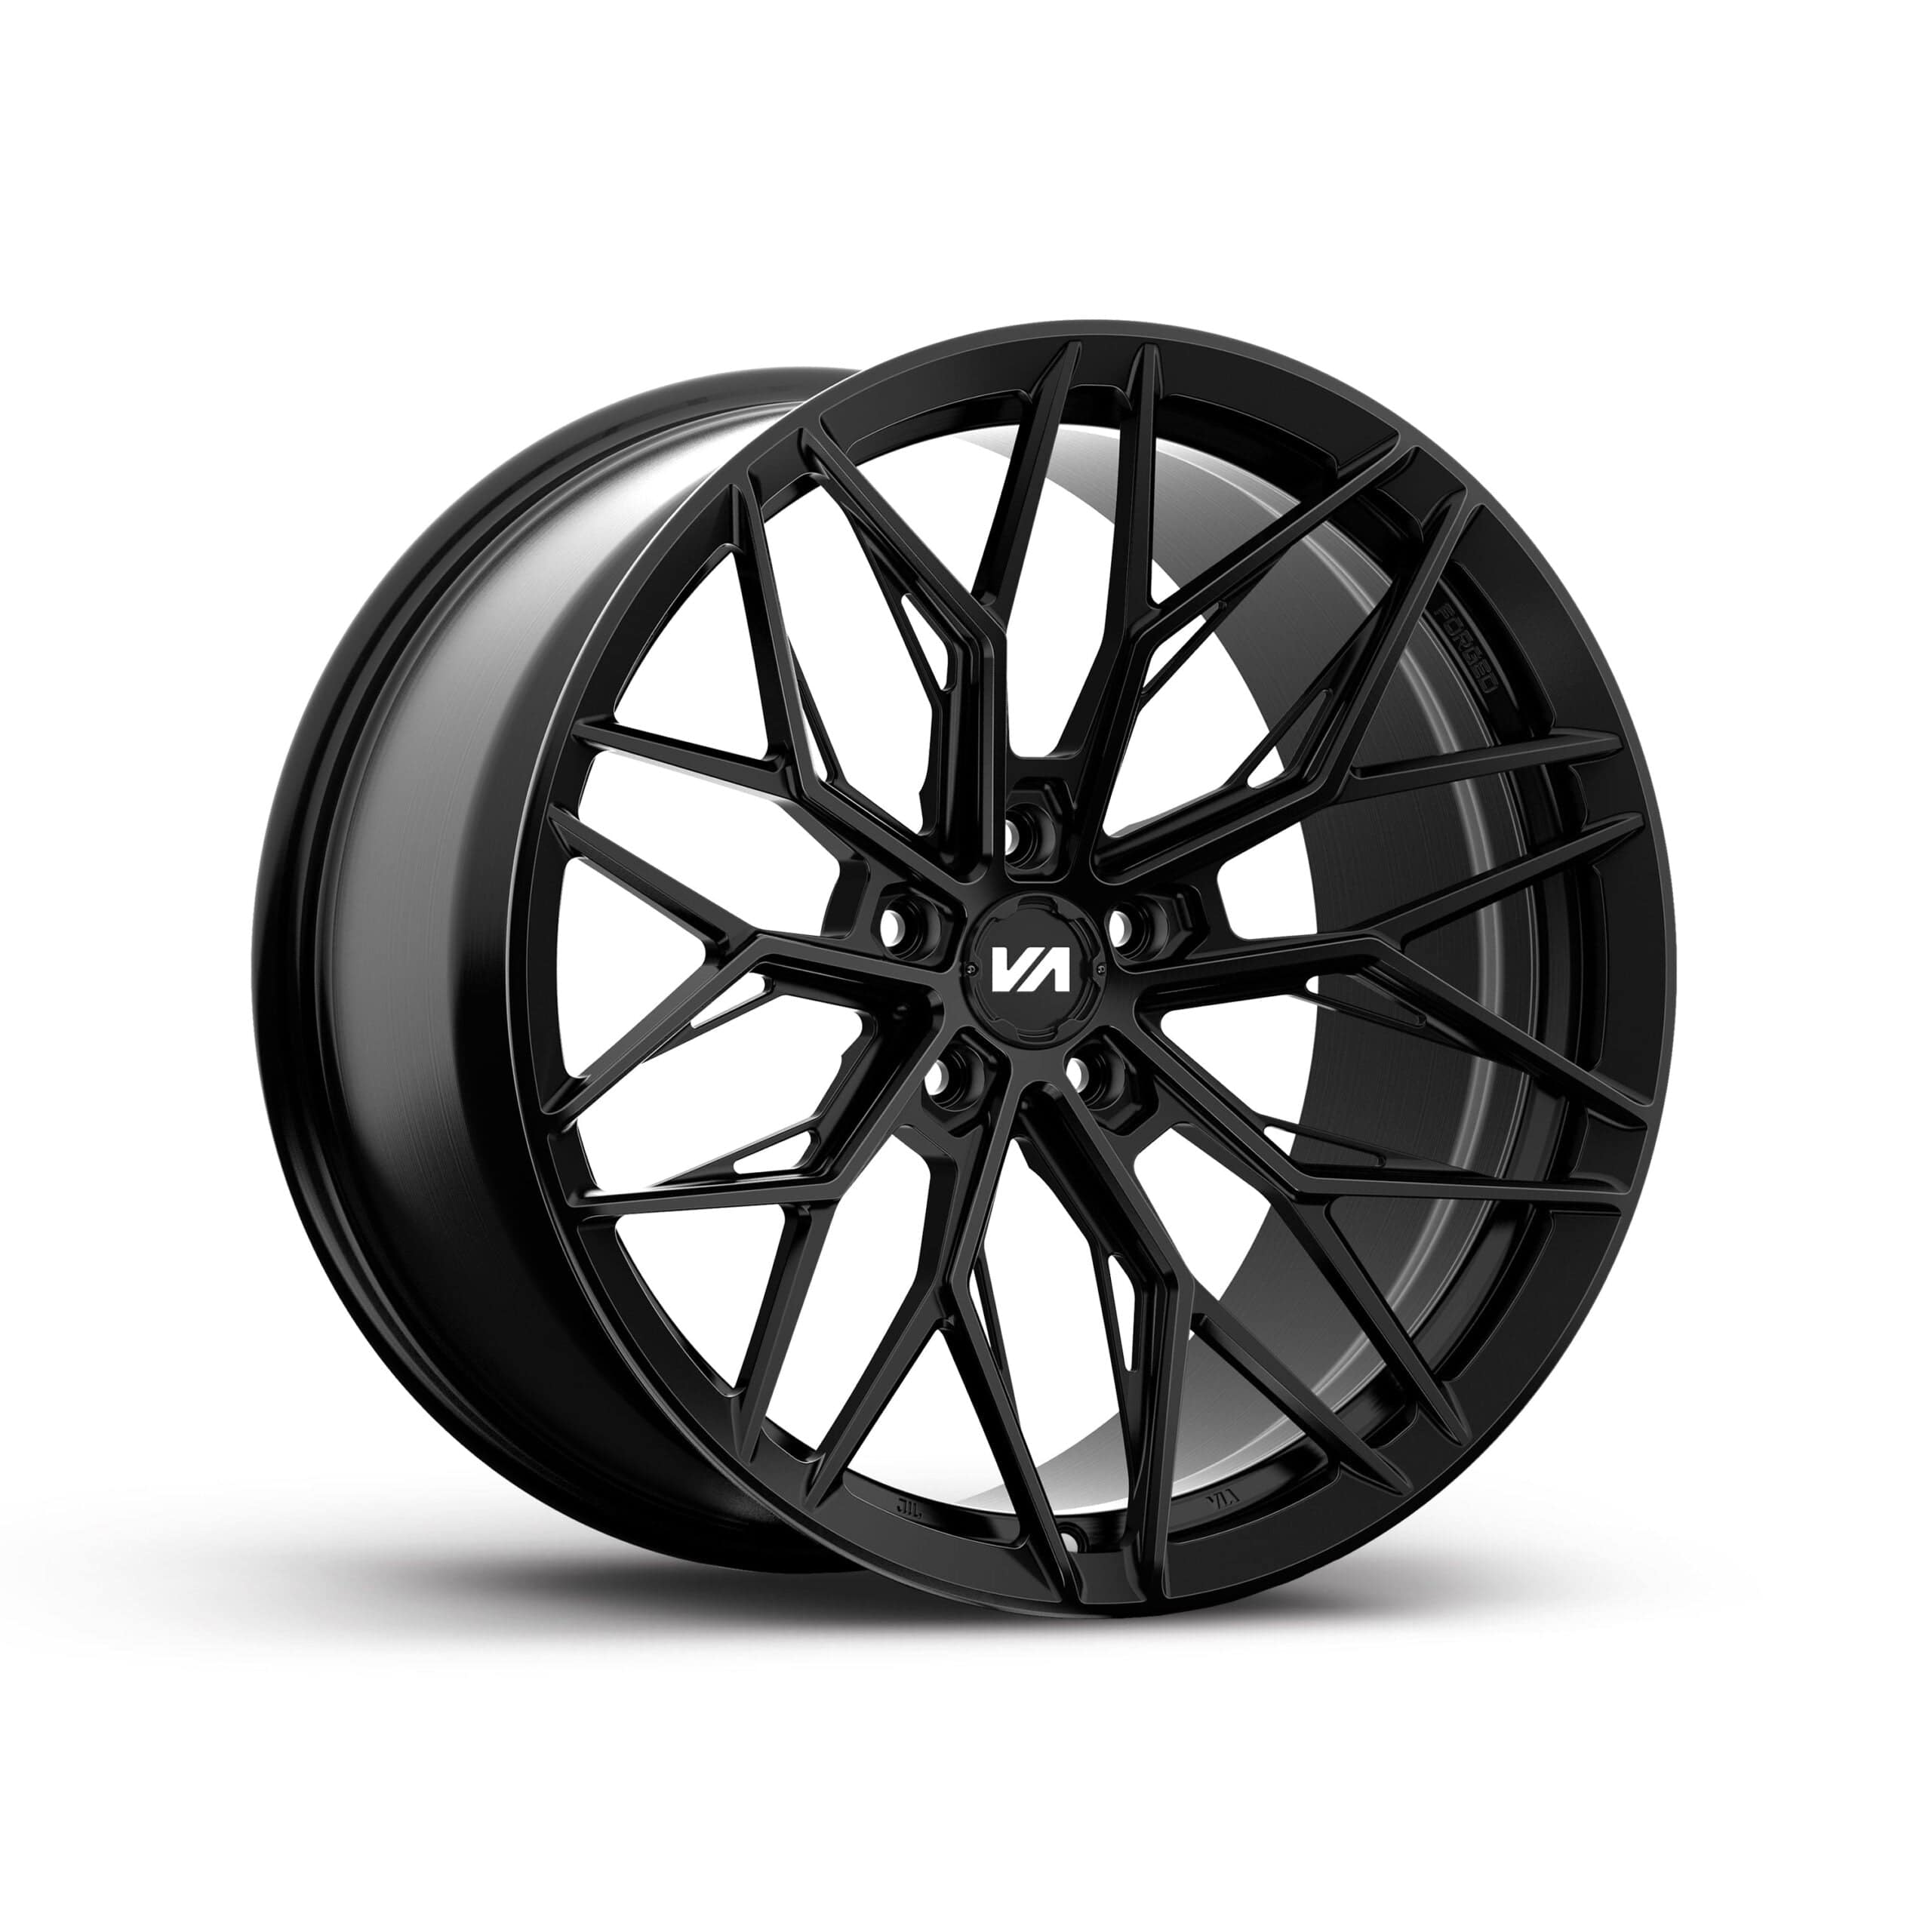 Kies-Motorsports Variant Variant™ Maxim Collection Alloy Wheels 19x11 (Super Deep)